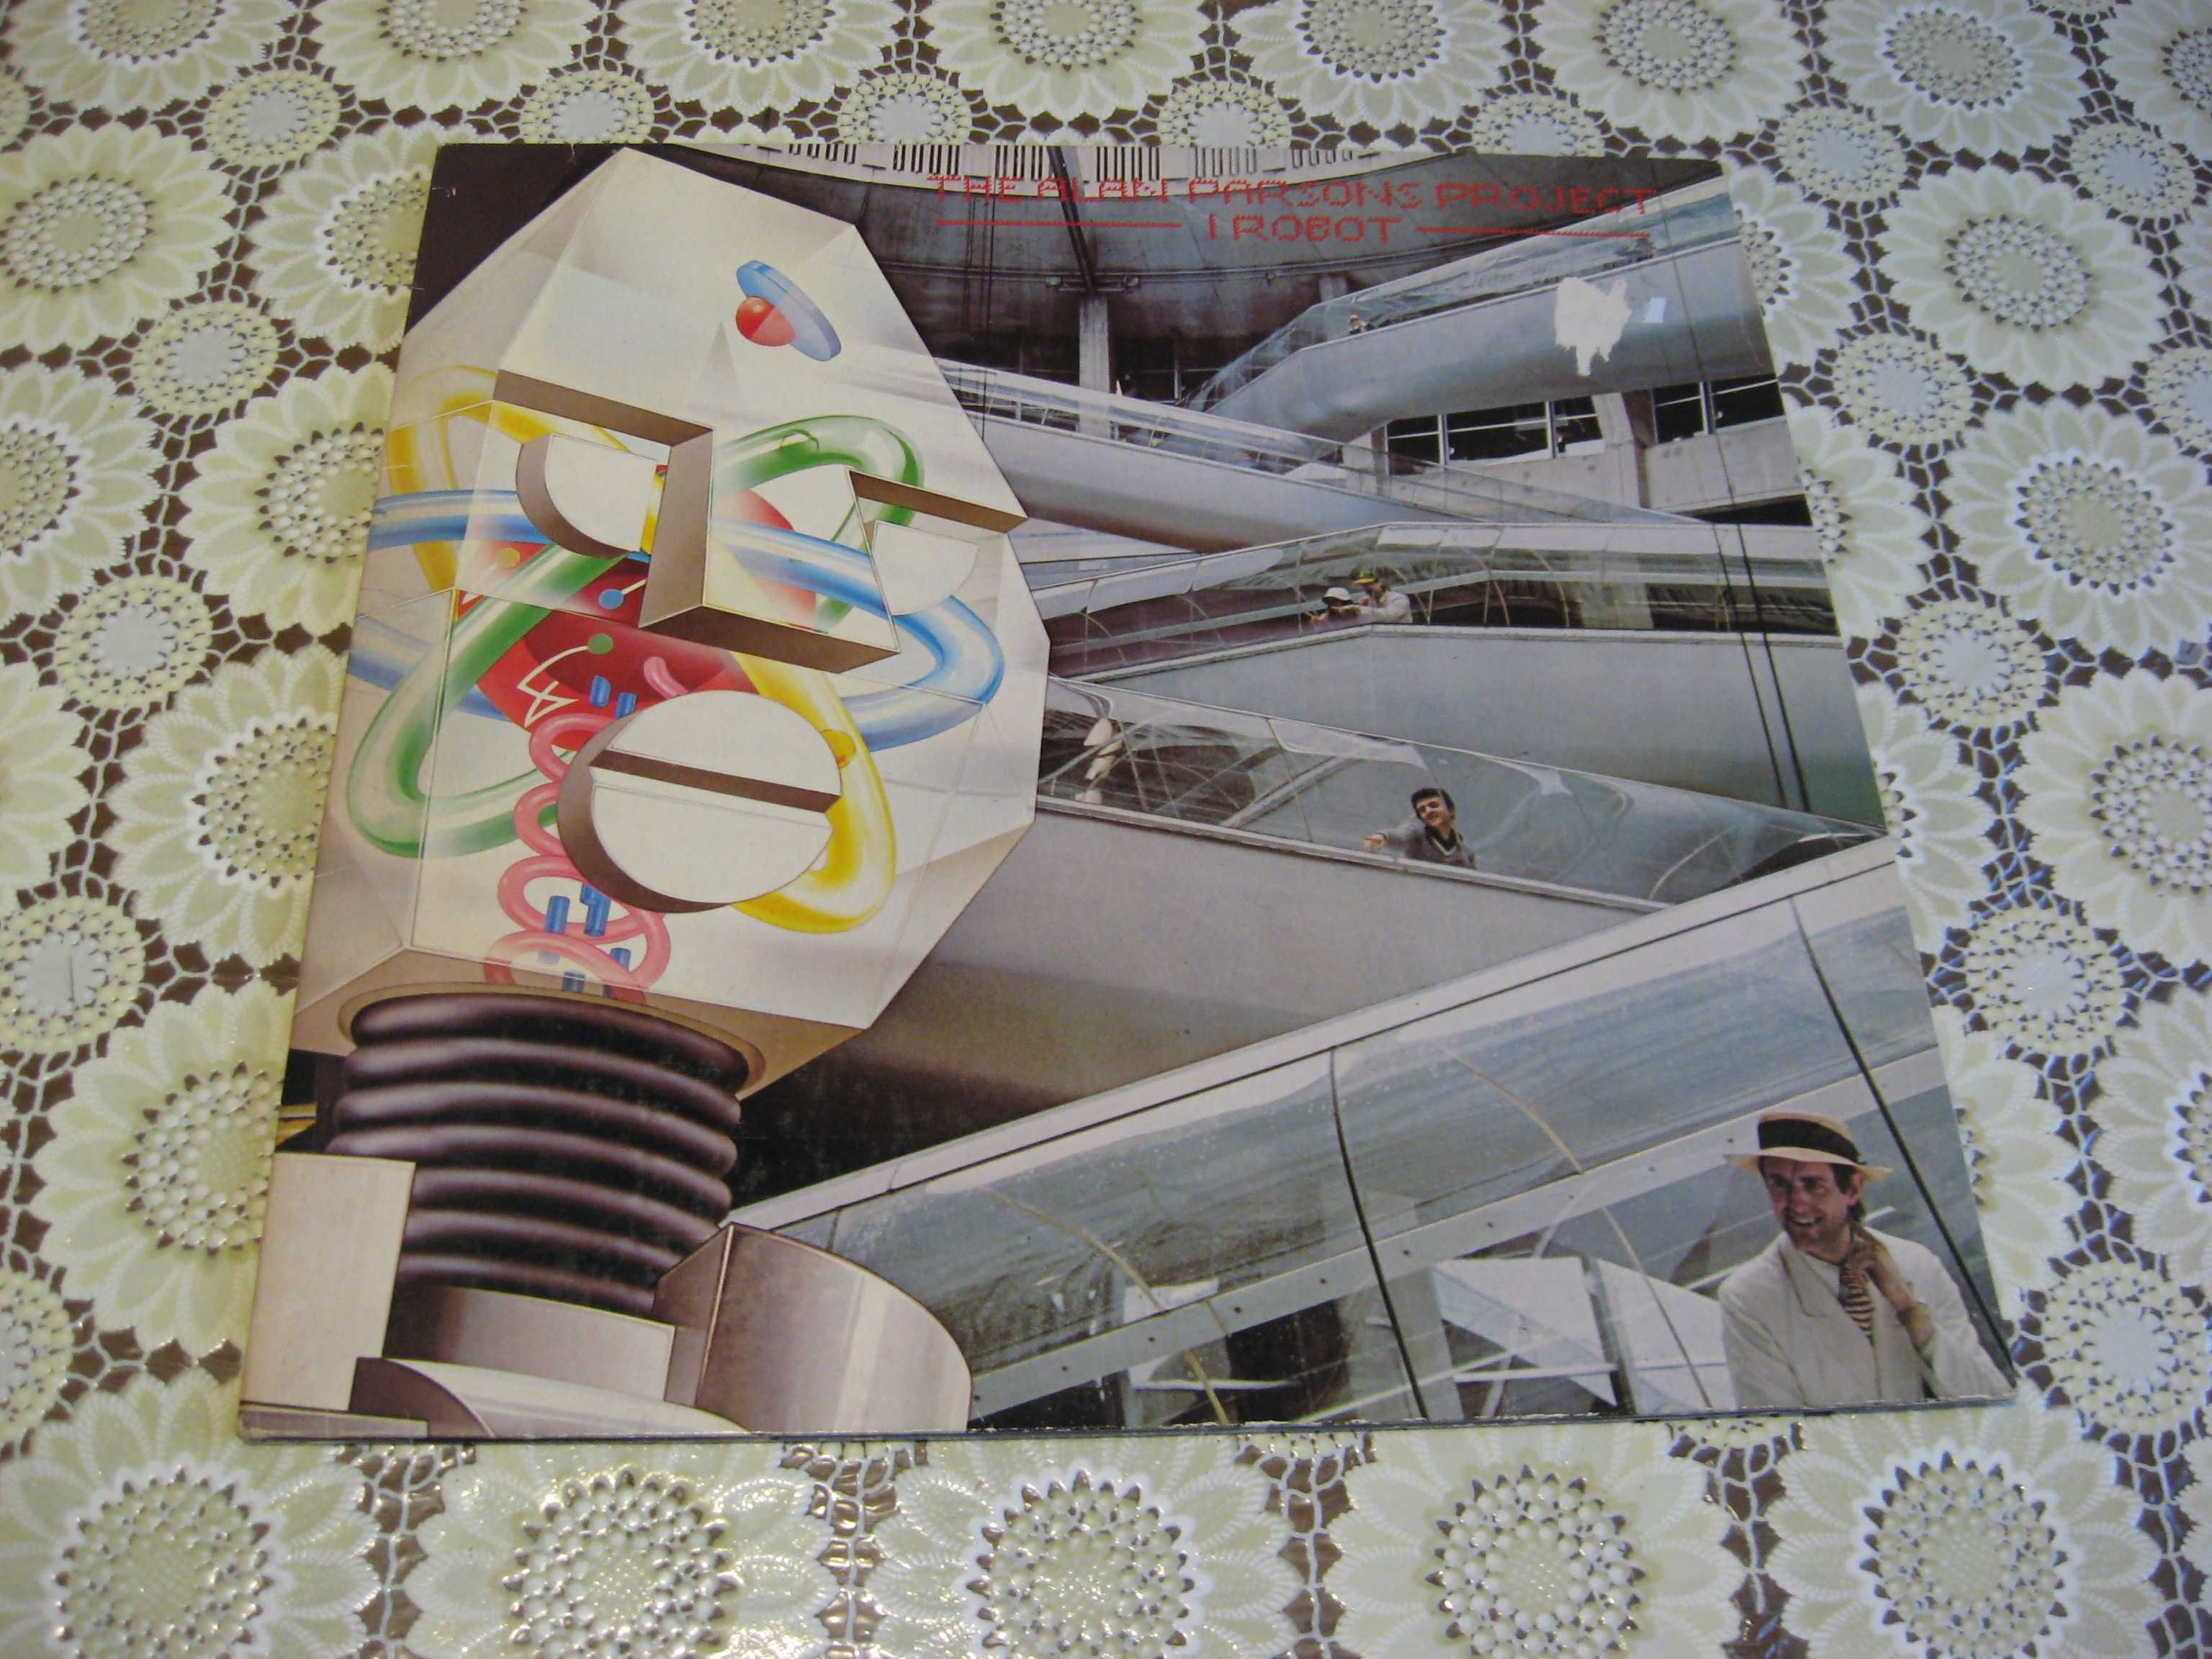 Пластинка винил The Alan Parsons Project " I Robot " 1977  USA